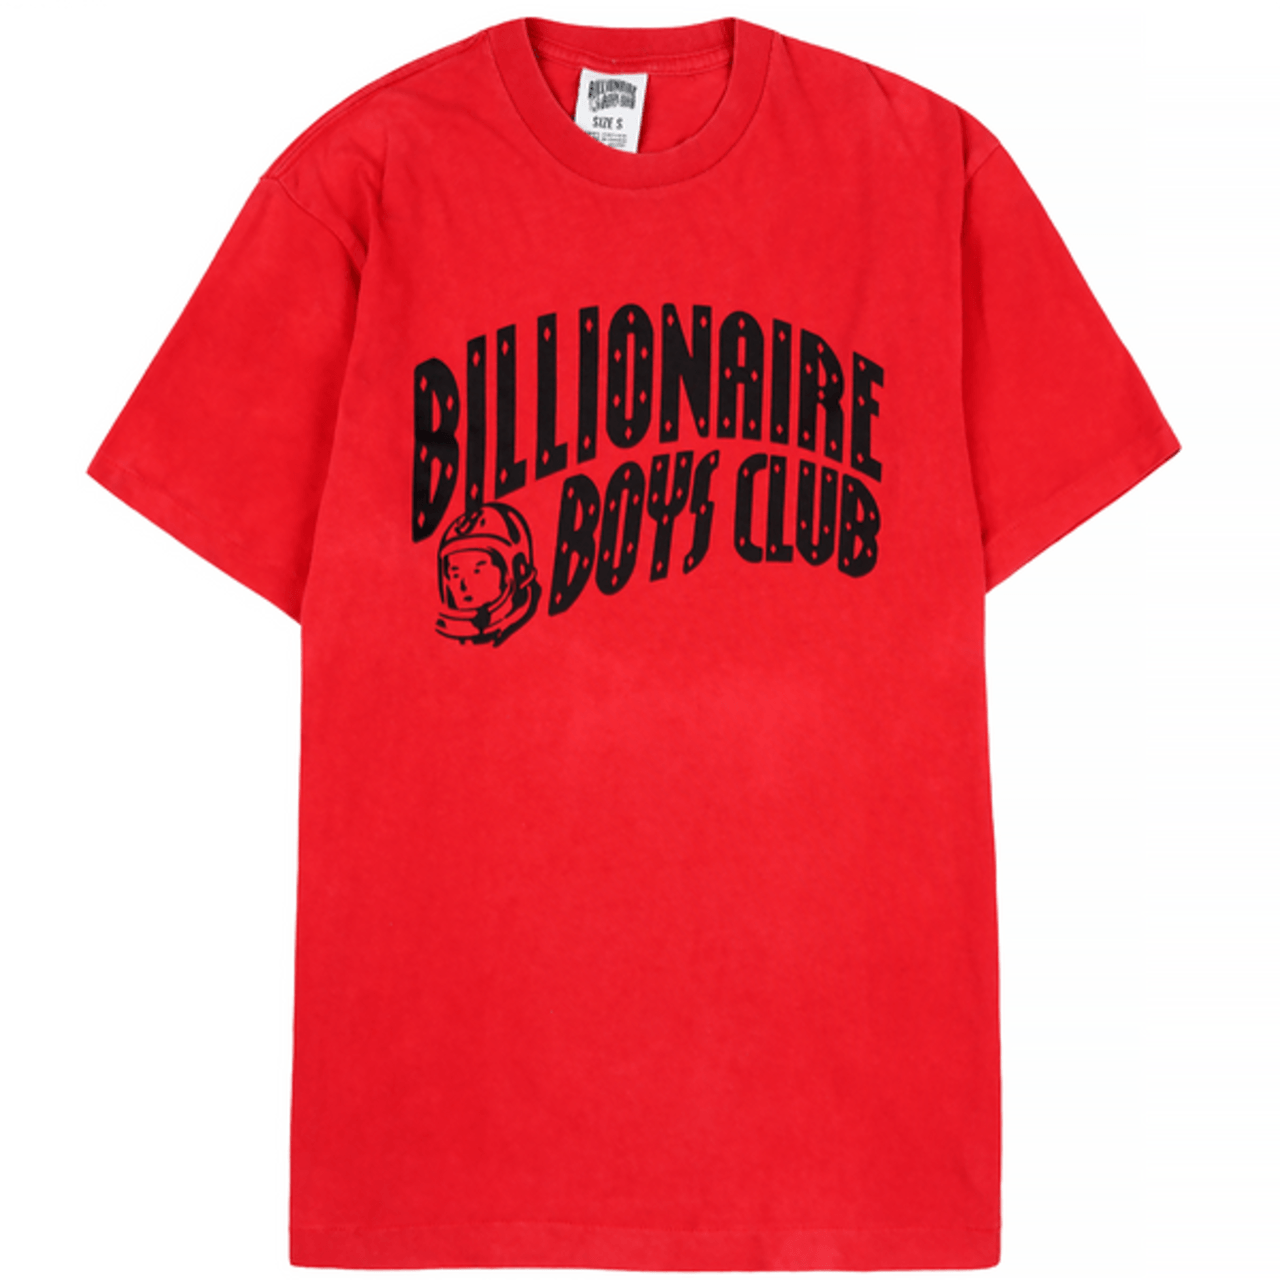 Red Billionare Boys Club Kaos